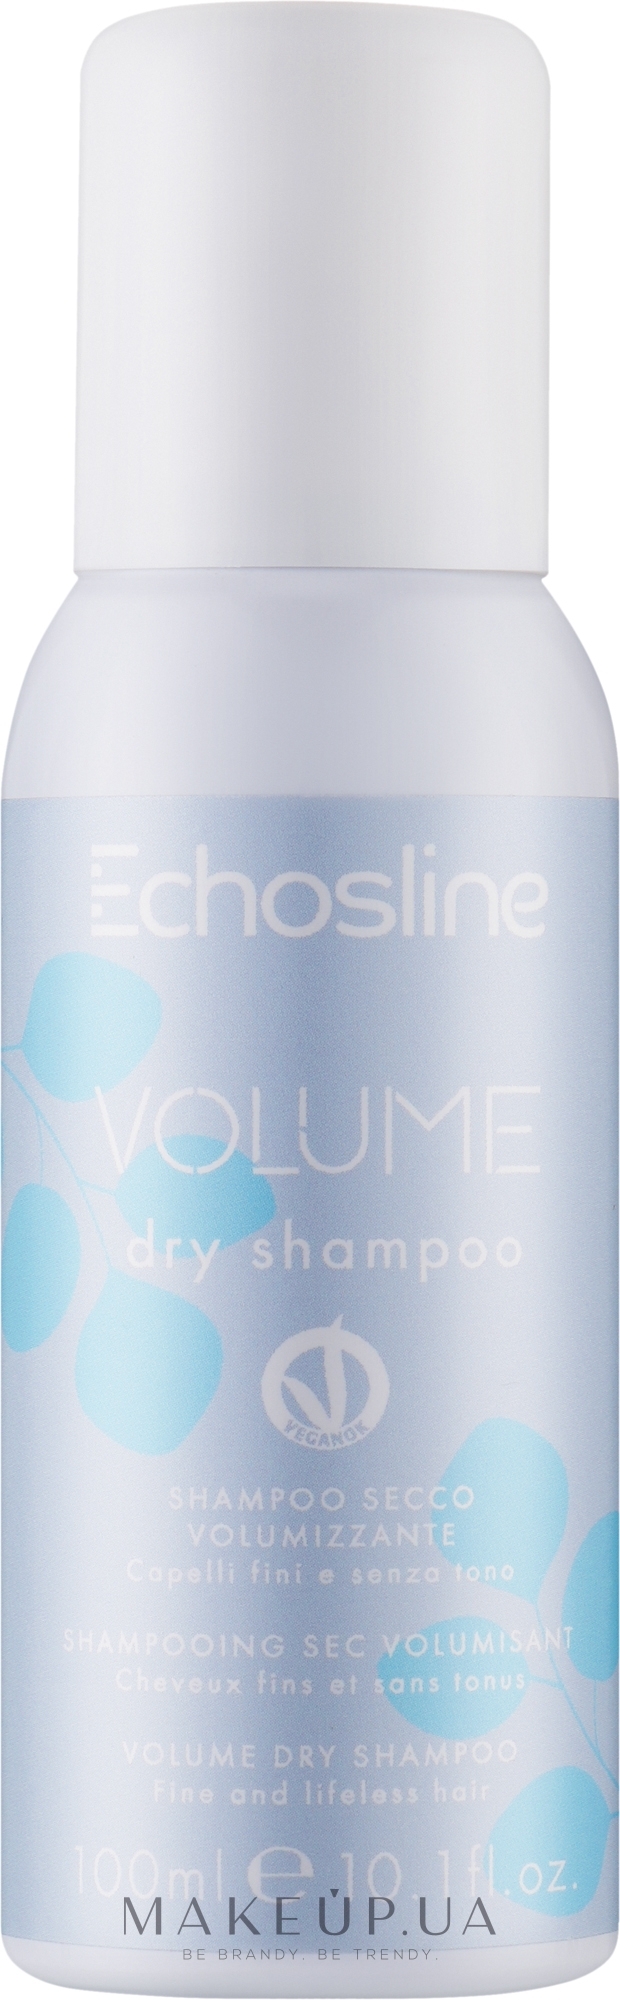 Сухий шампунь для об'єму волосся - Echosline Volume Dry Shampoo — фото 100ml